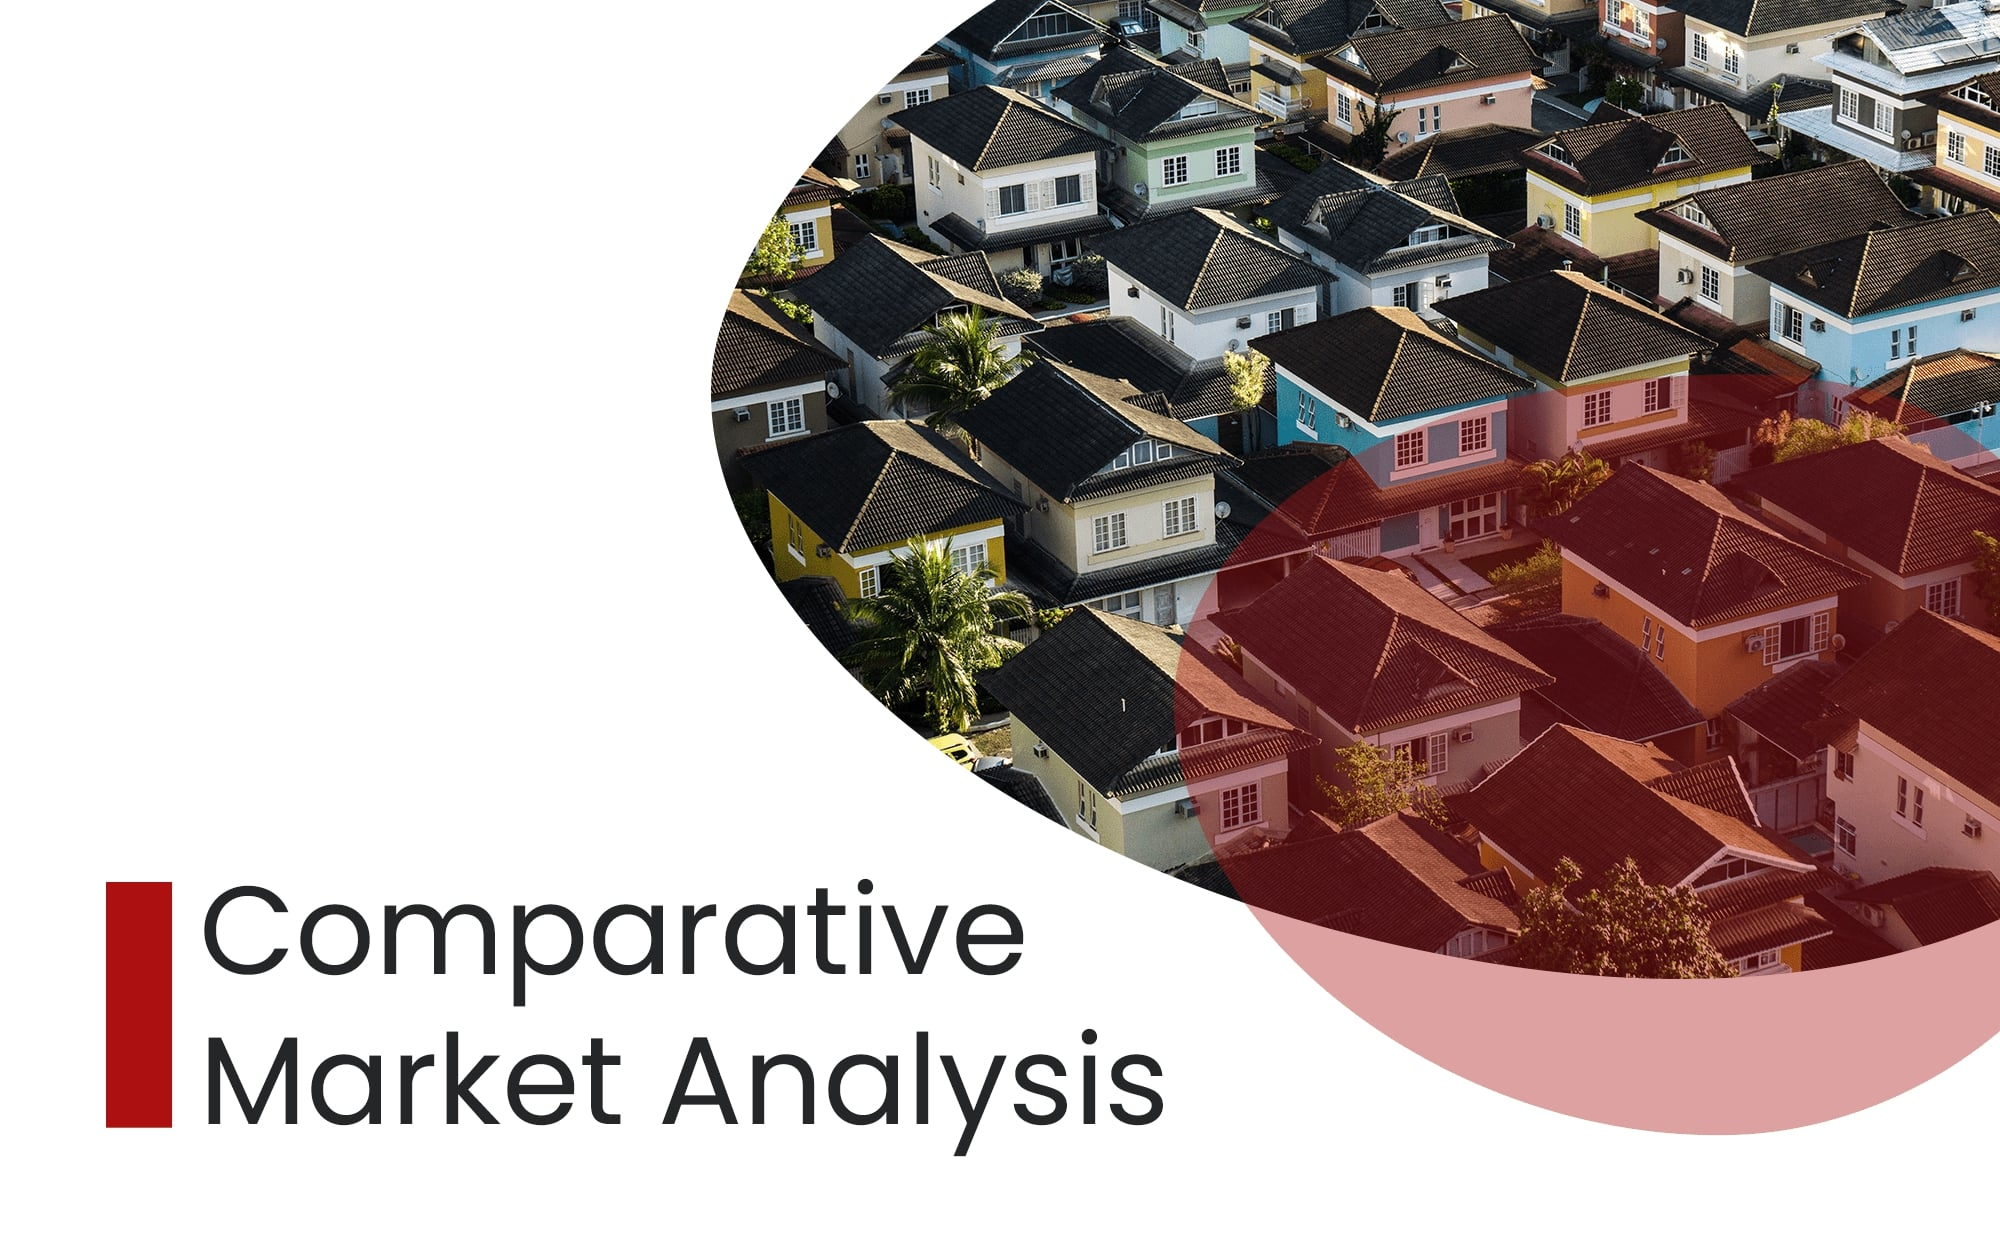 Comparative Market Analysis Template Regarding Comparative Market Analysis Real Estate Template With Regard To Comparative Market Analysis Real Estate Template